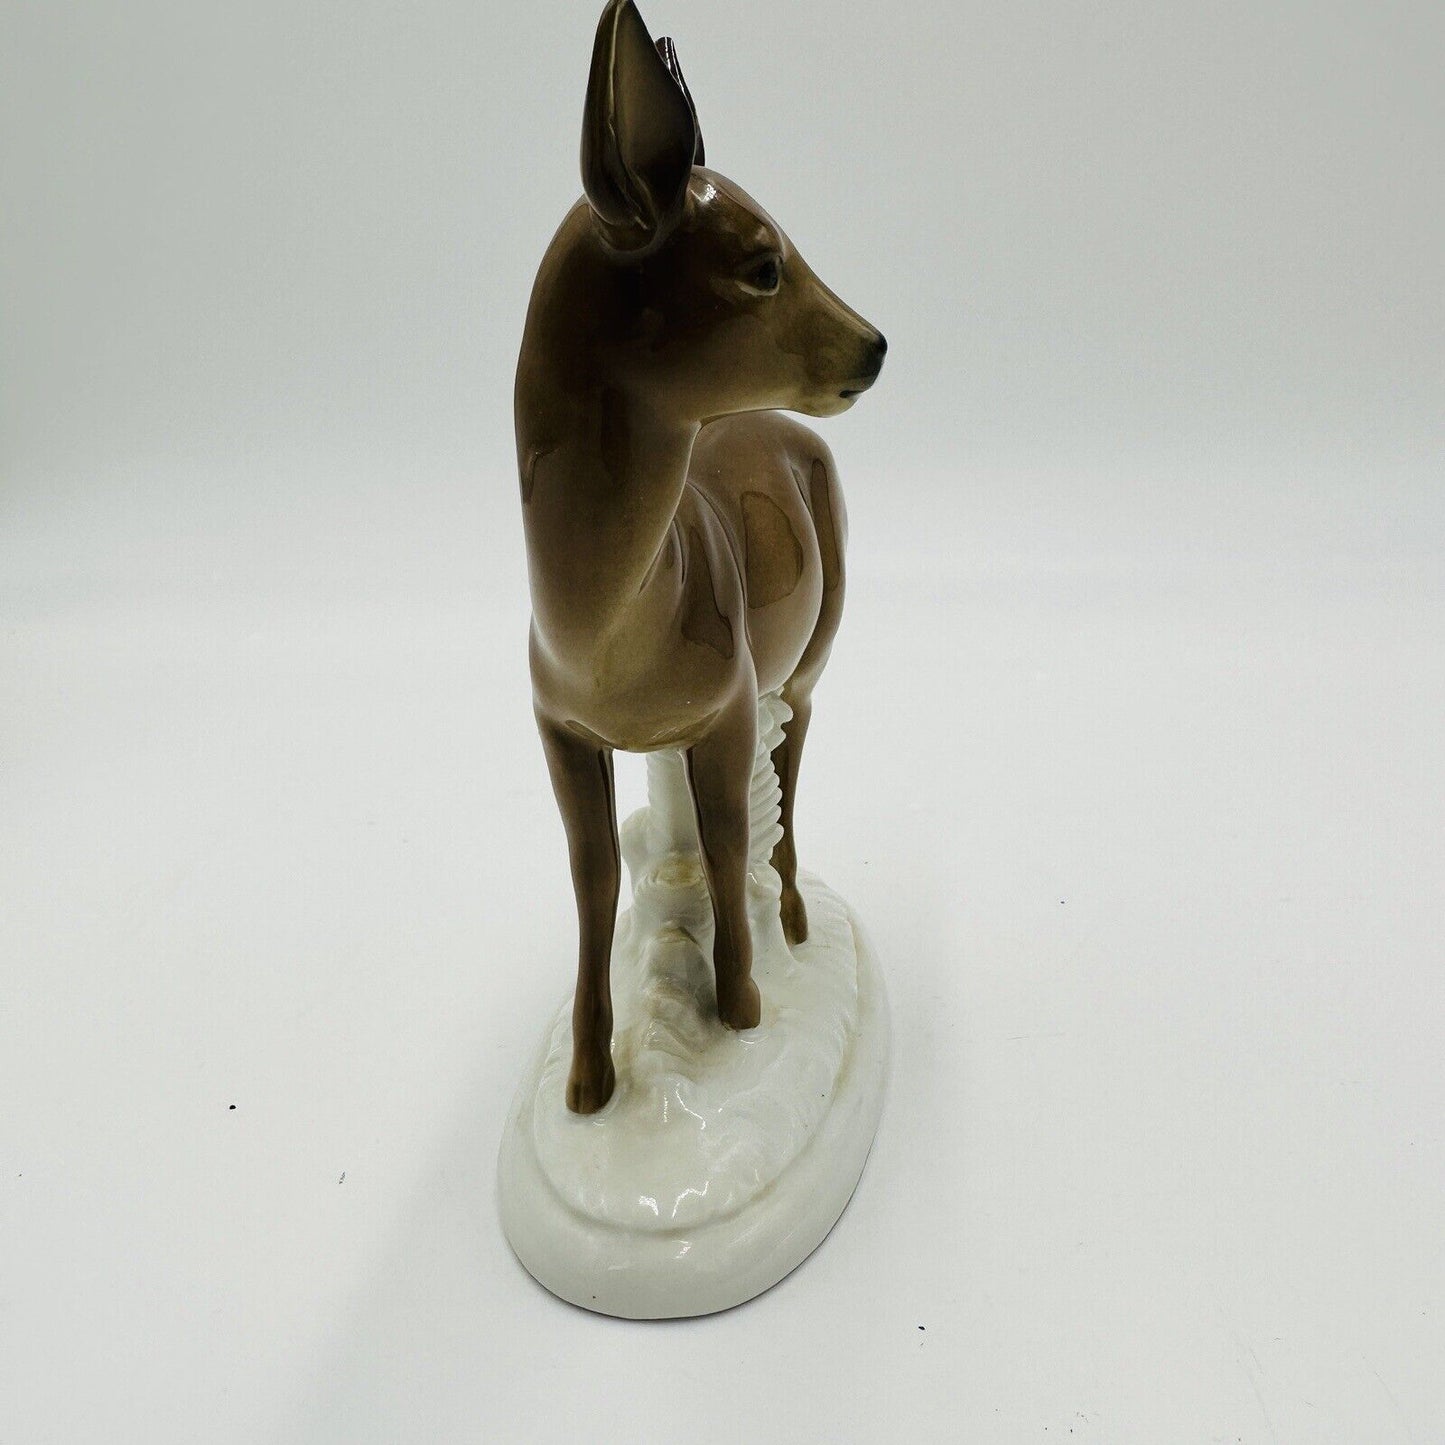 Gerold Porzellan Deer Figurine Porcelain Bavaria Germany Glossy Brown Vintage